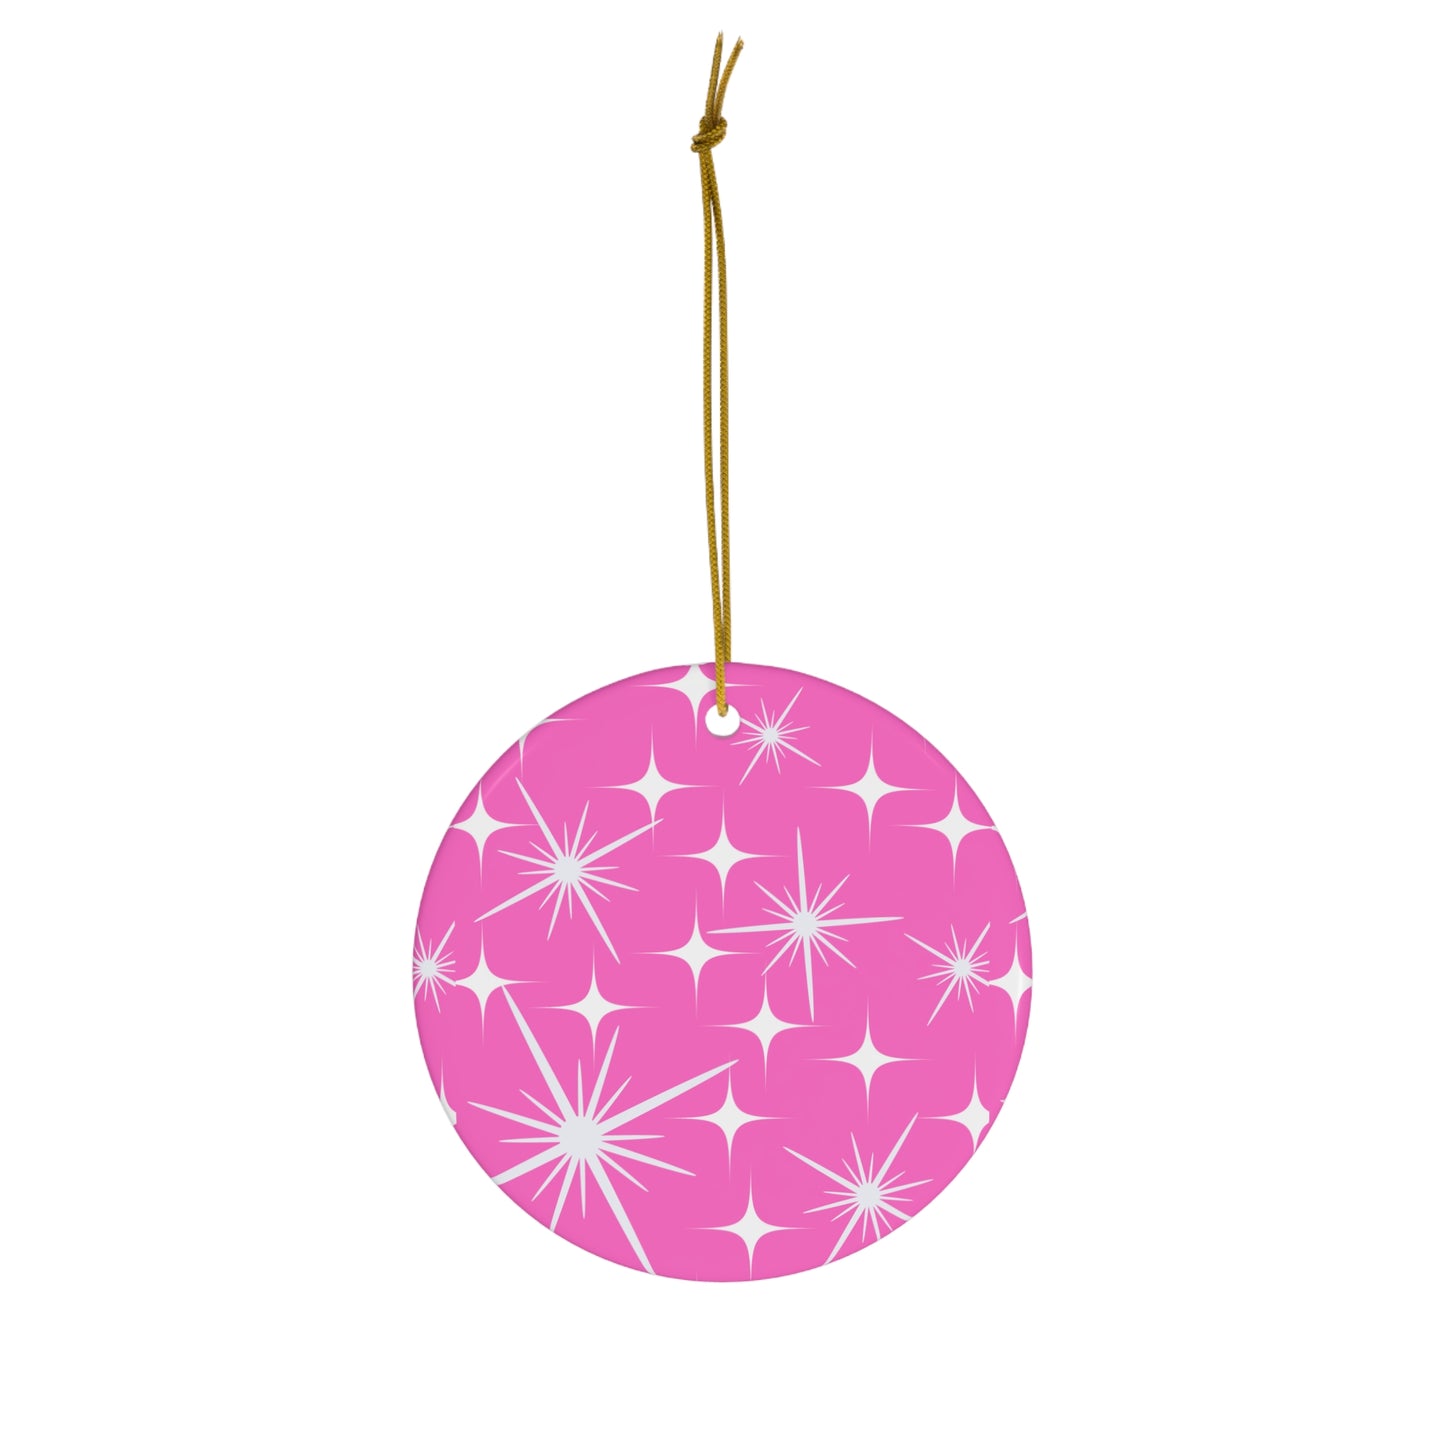 Midcentury Modern Celestial Stars Pink Ceramic Ornament